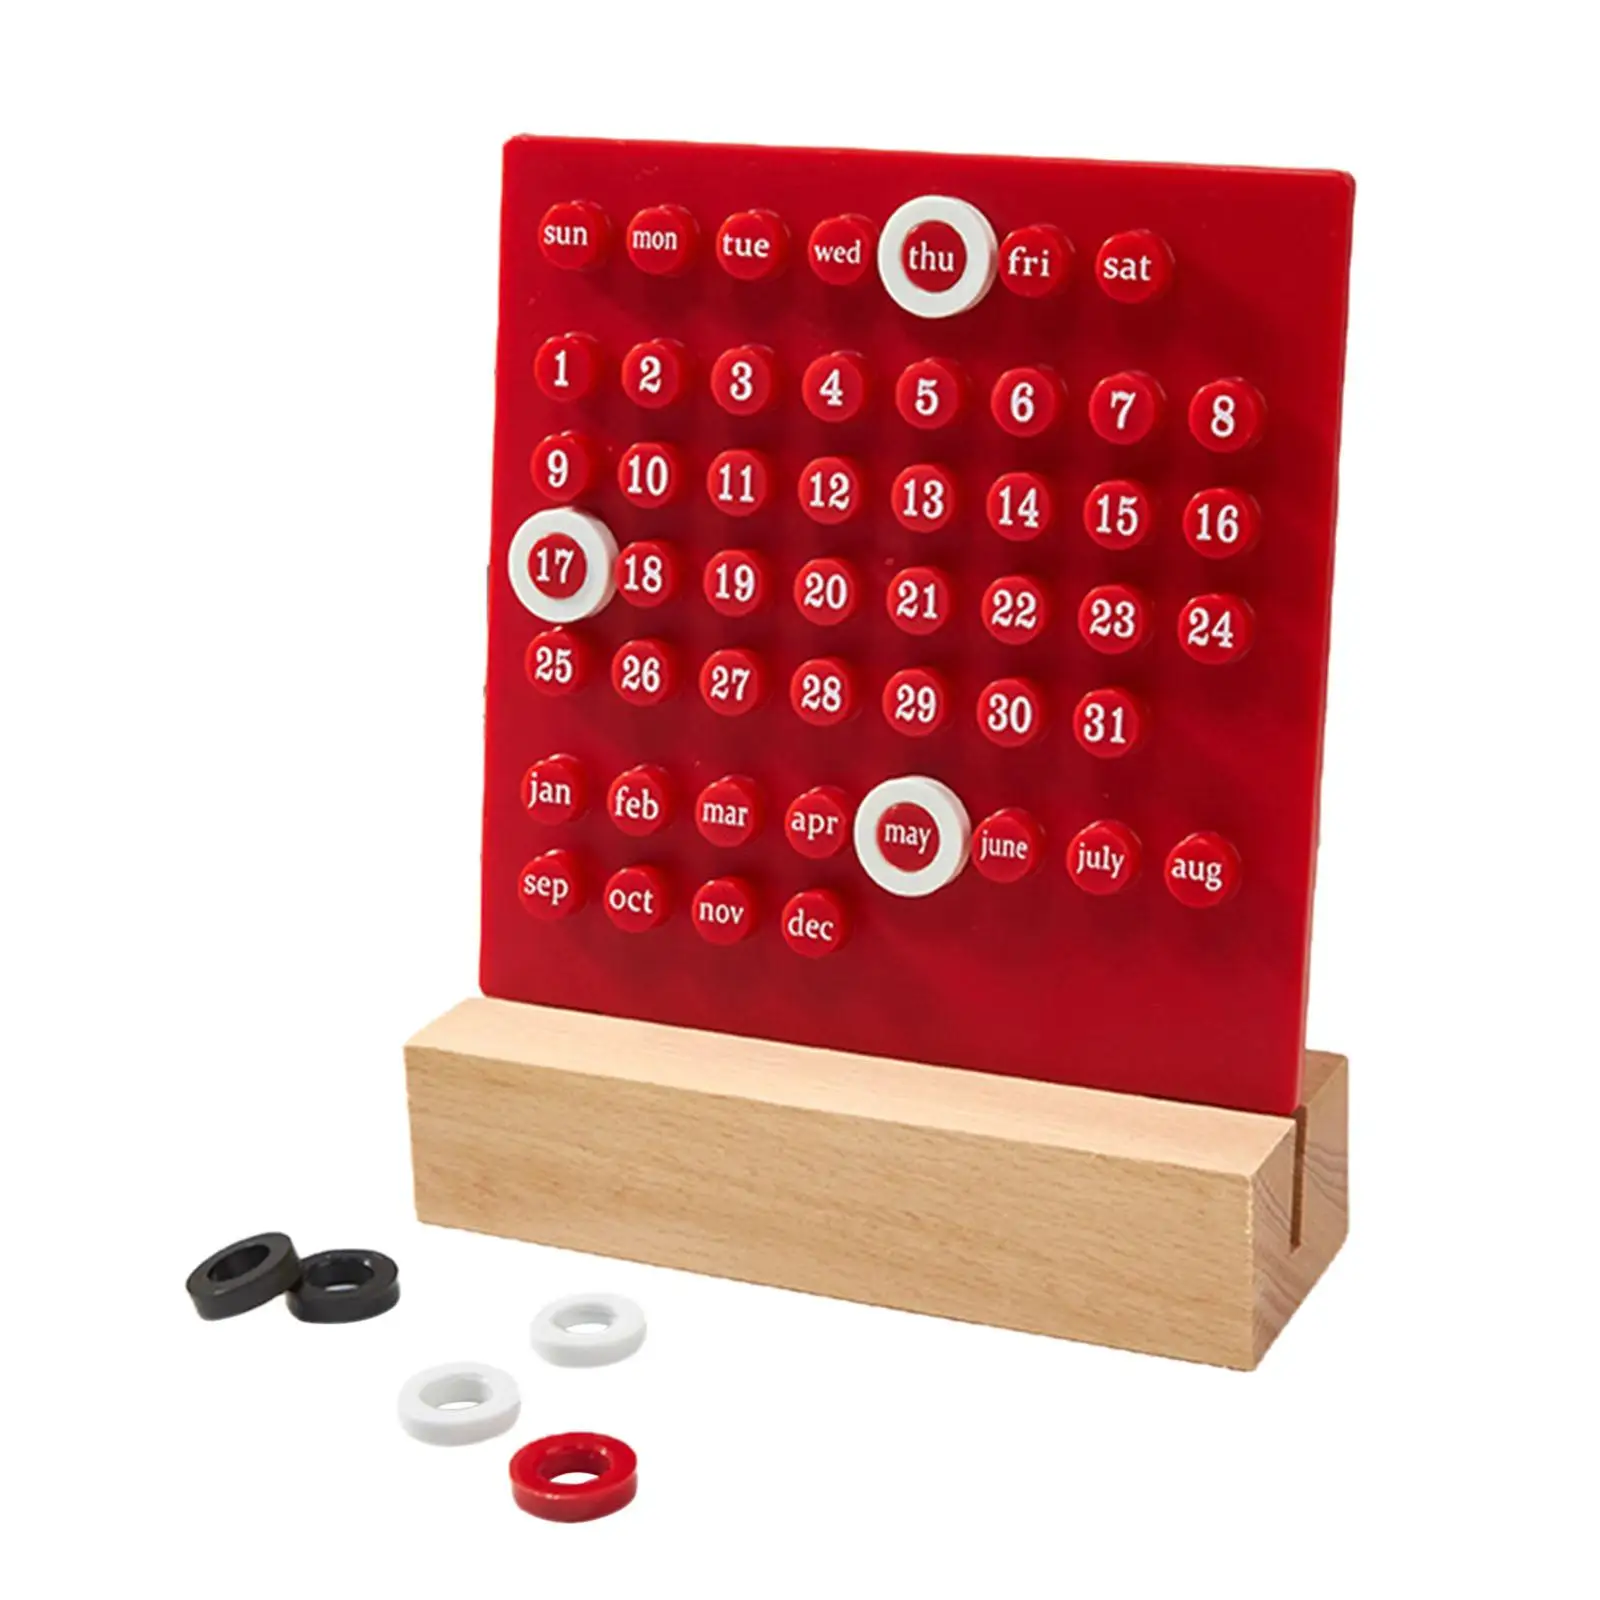 Cute Desk Calendar DIY Educational Toy Supplies Kids Calendar for Decor Desktop Tabletop